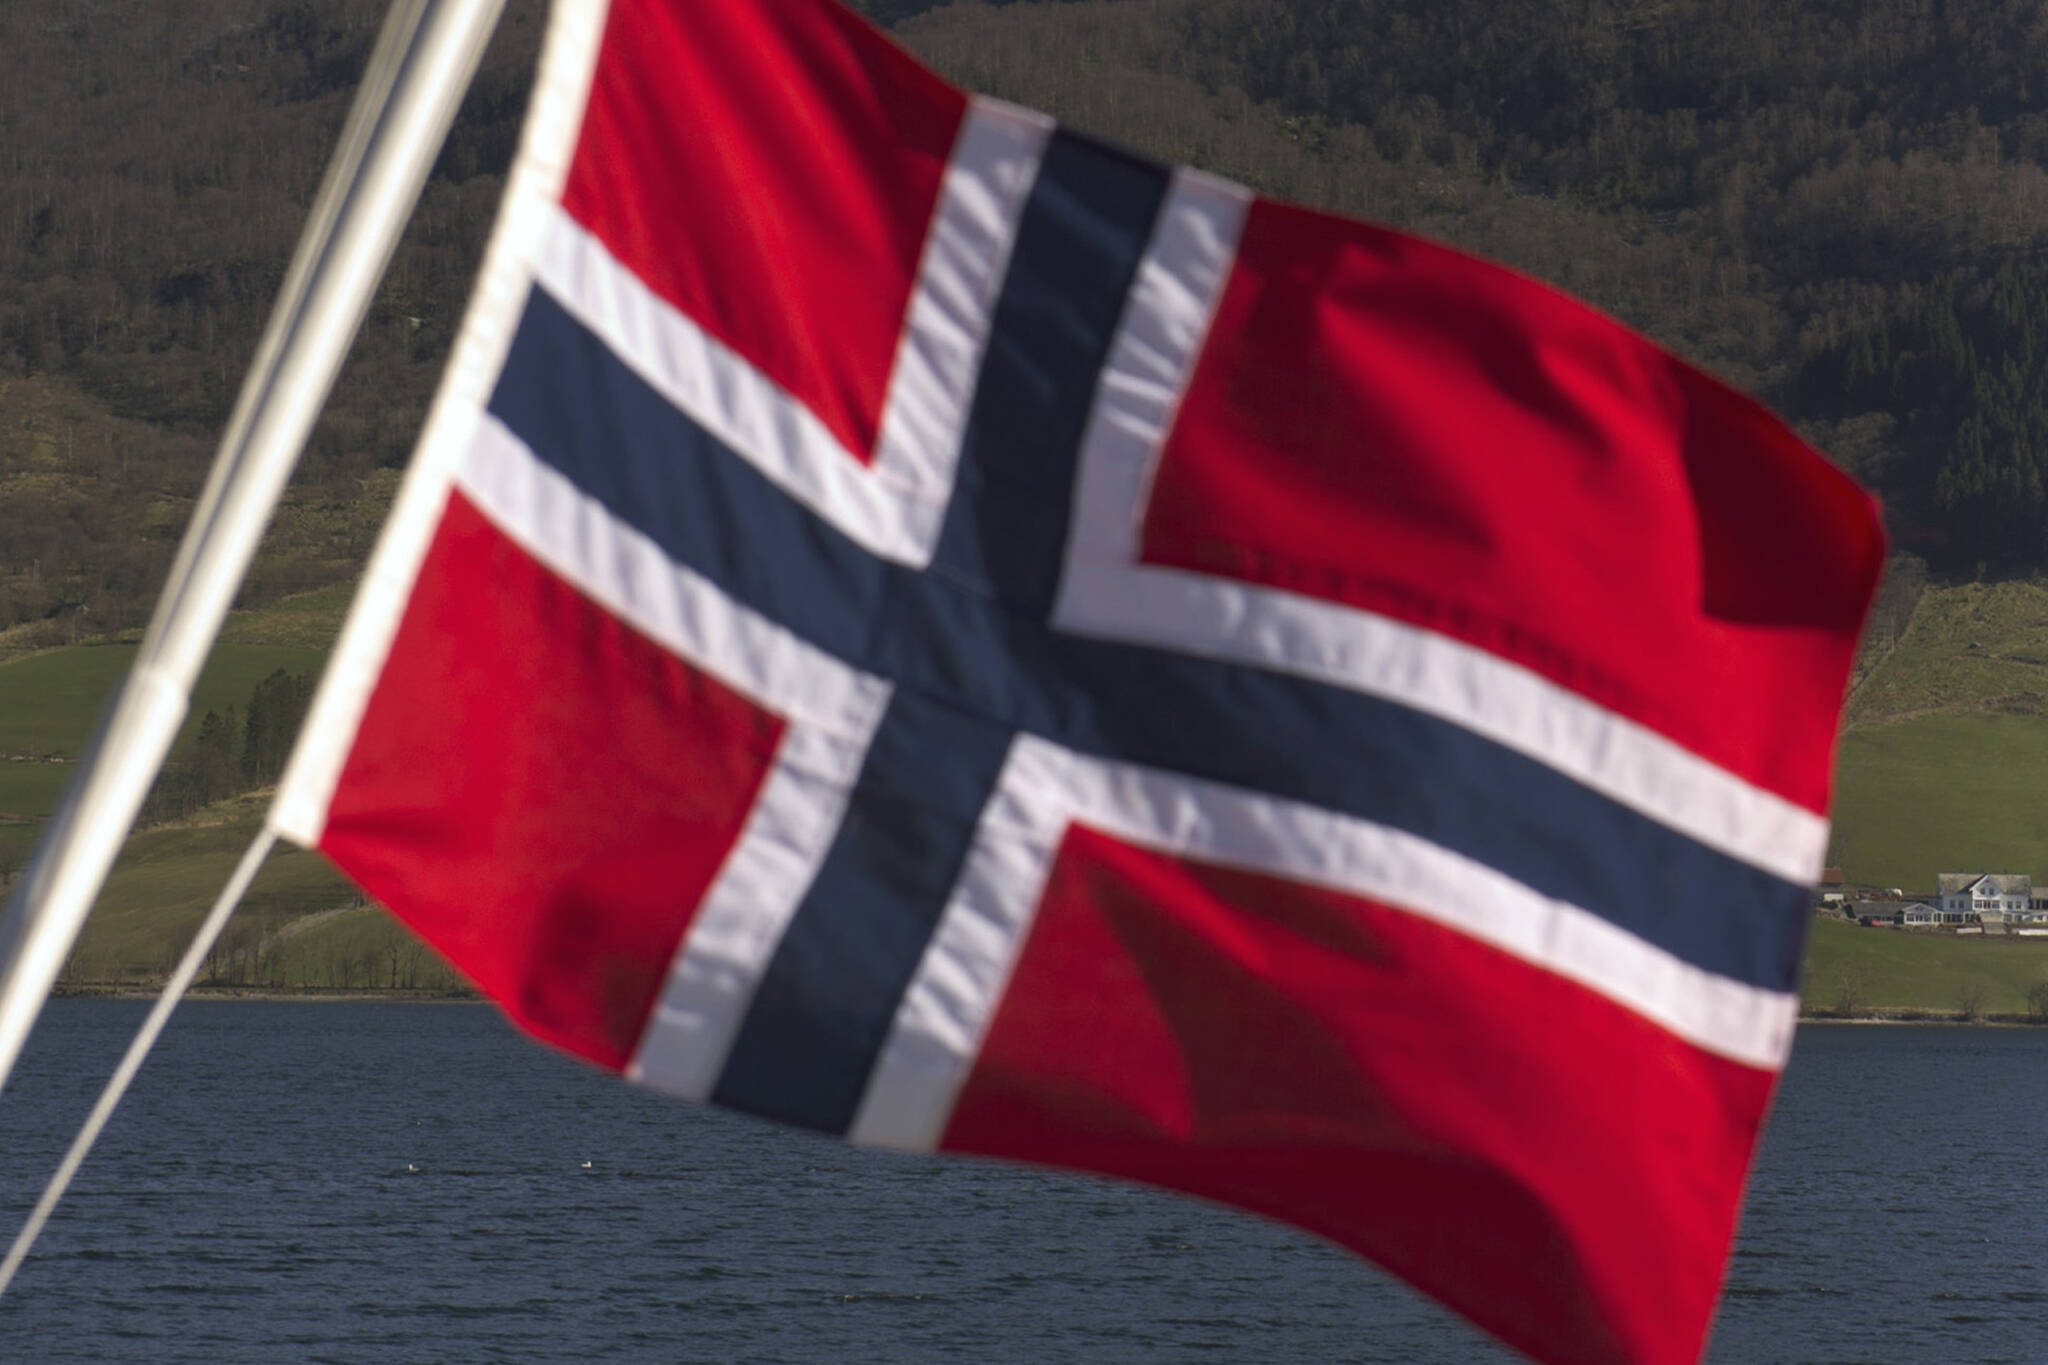 The Norwegian national flag in Olensvag, Norway, on April 3, 2012. MUST CREDIT: Bloomberg photo by Kristian Helgesen.